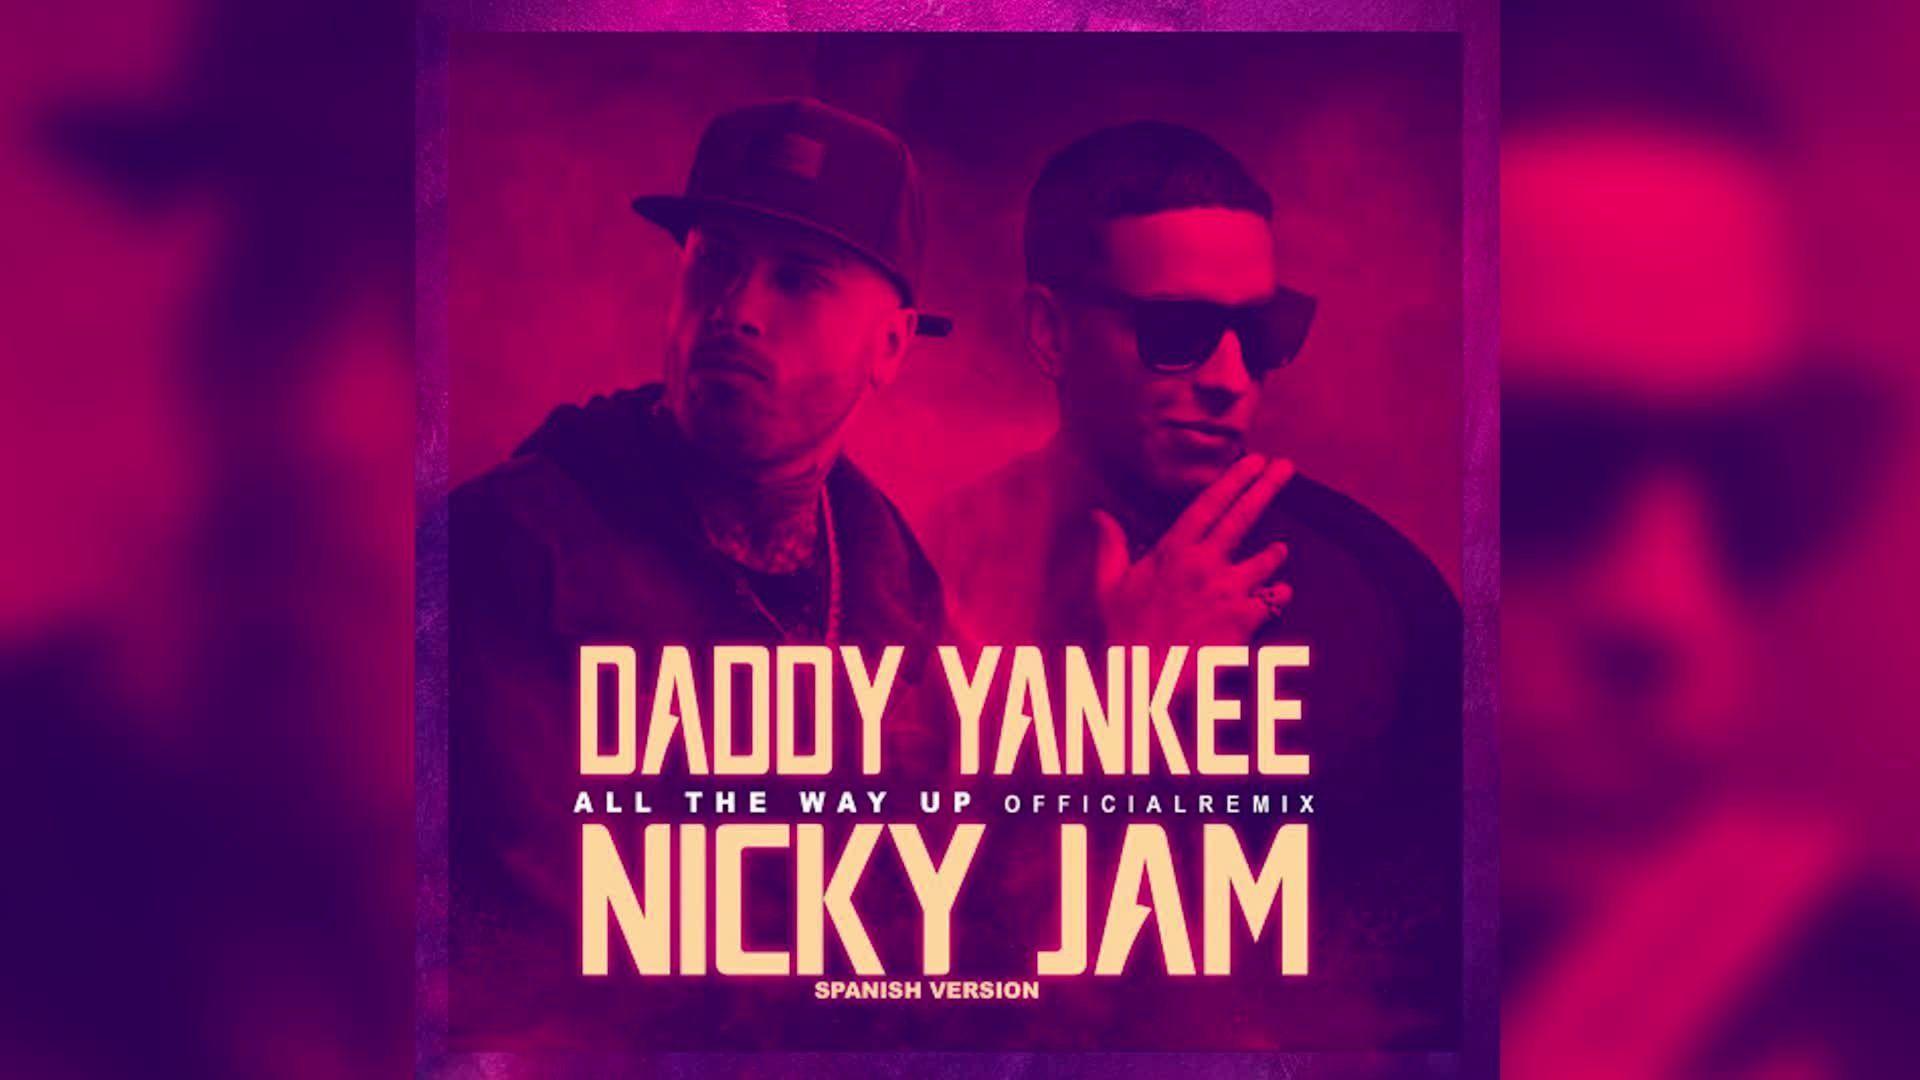 Daddy Yankee Nicky Jam. Daddy Yankee фото. Nicky Jam feat. Daddy Yankee. Fat Joe Daddy Yankee.